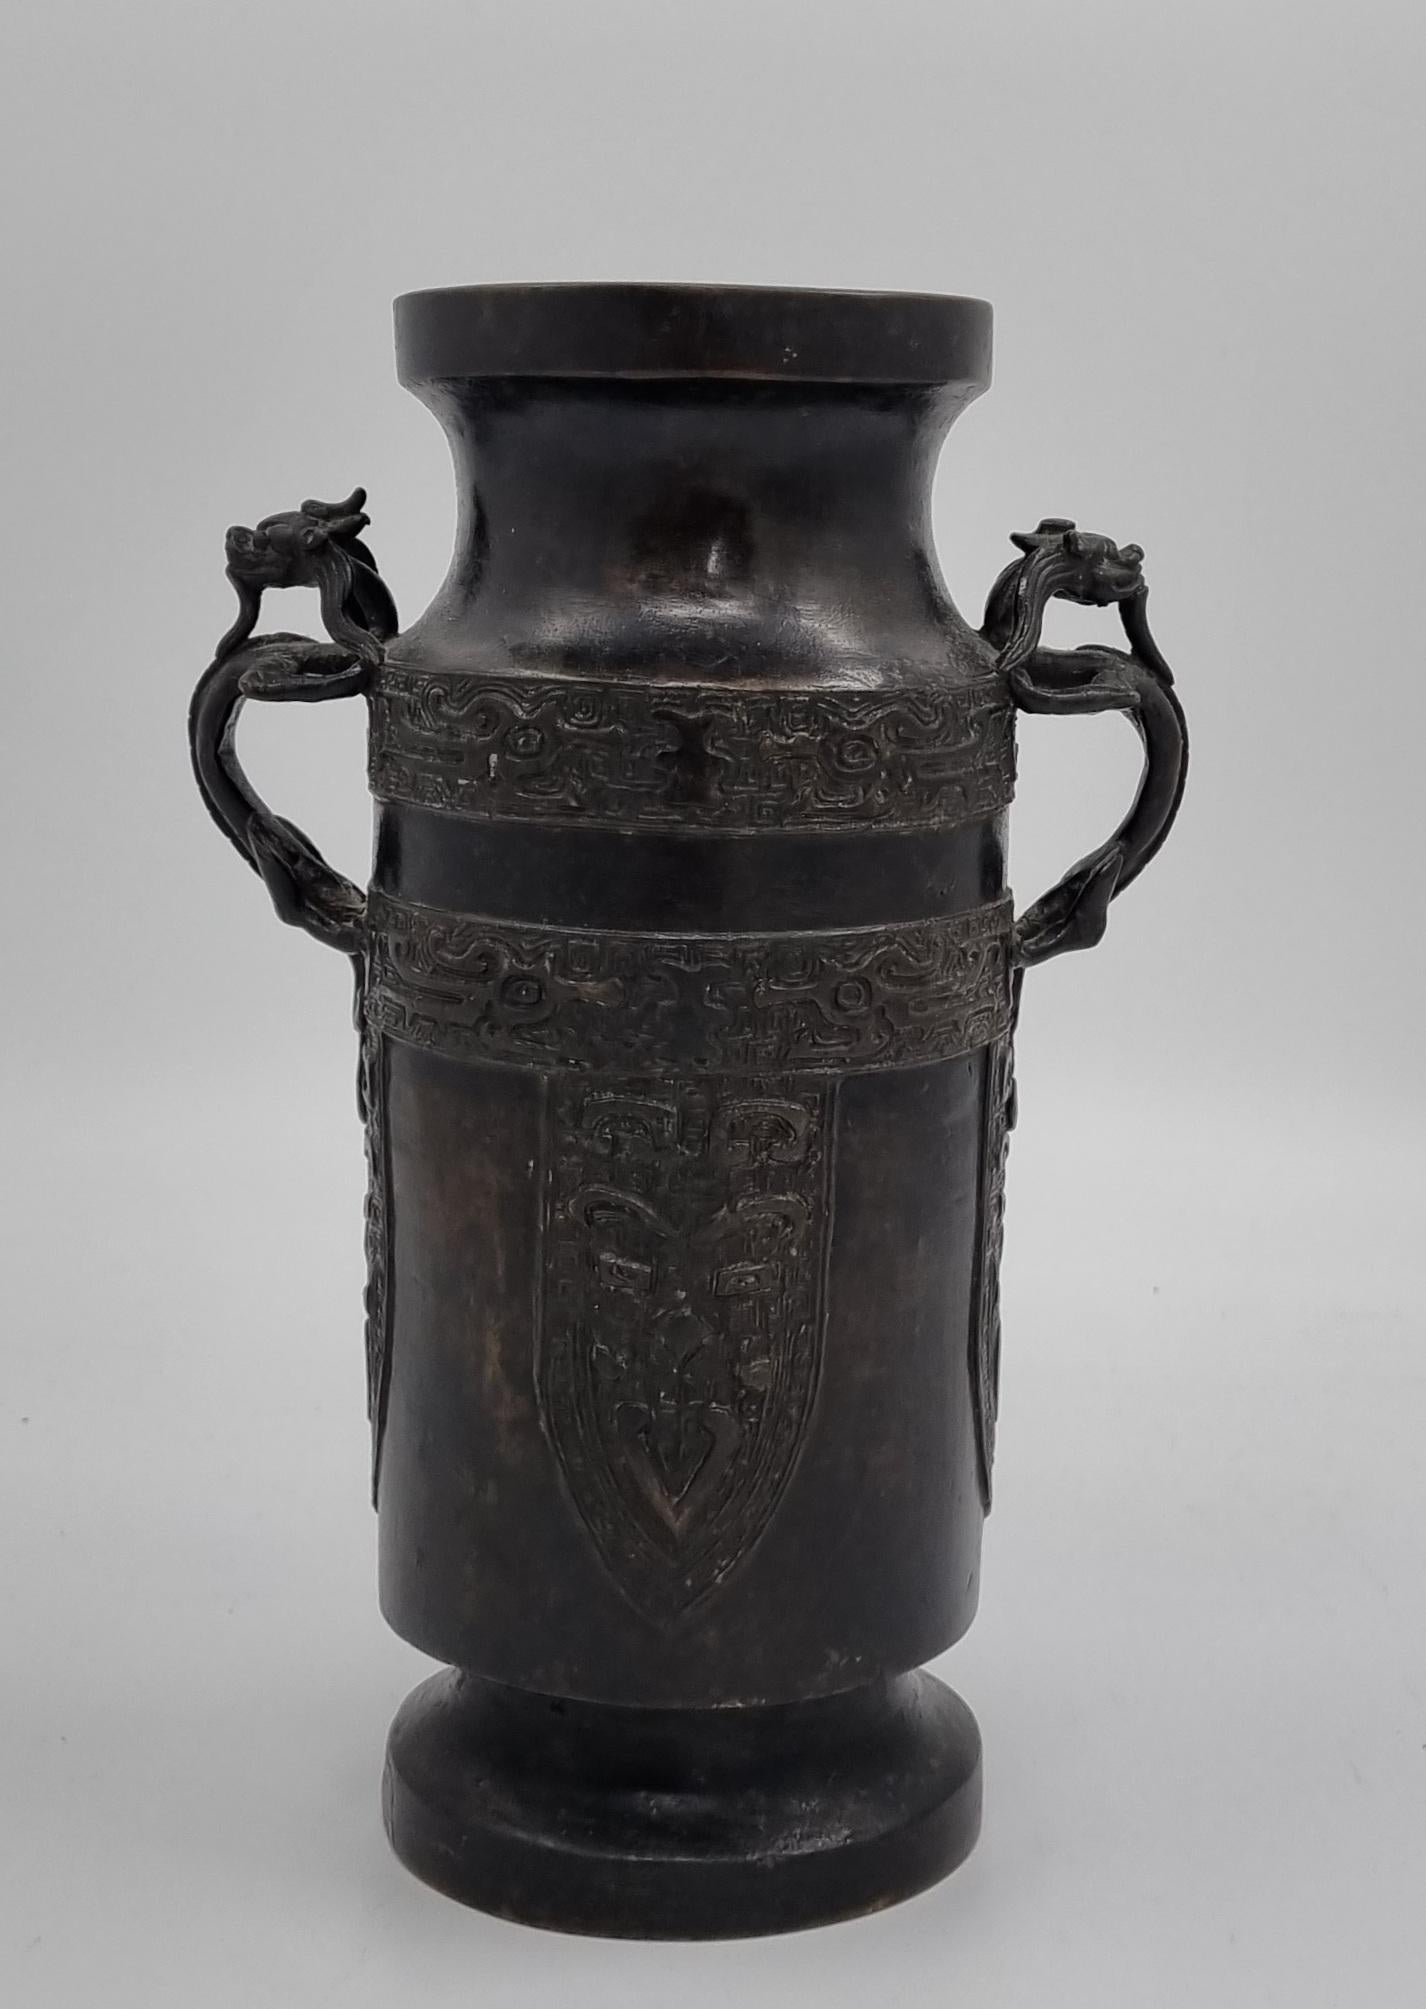 Cast Ming Dynasty Bronze Vase ( 1368- 1644 )